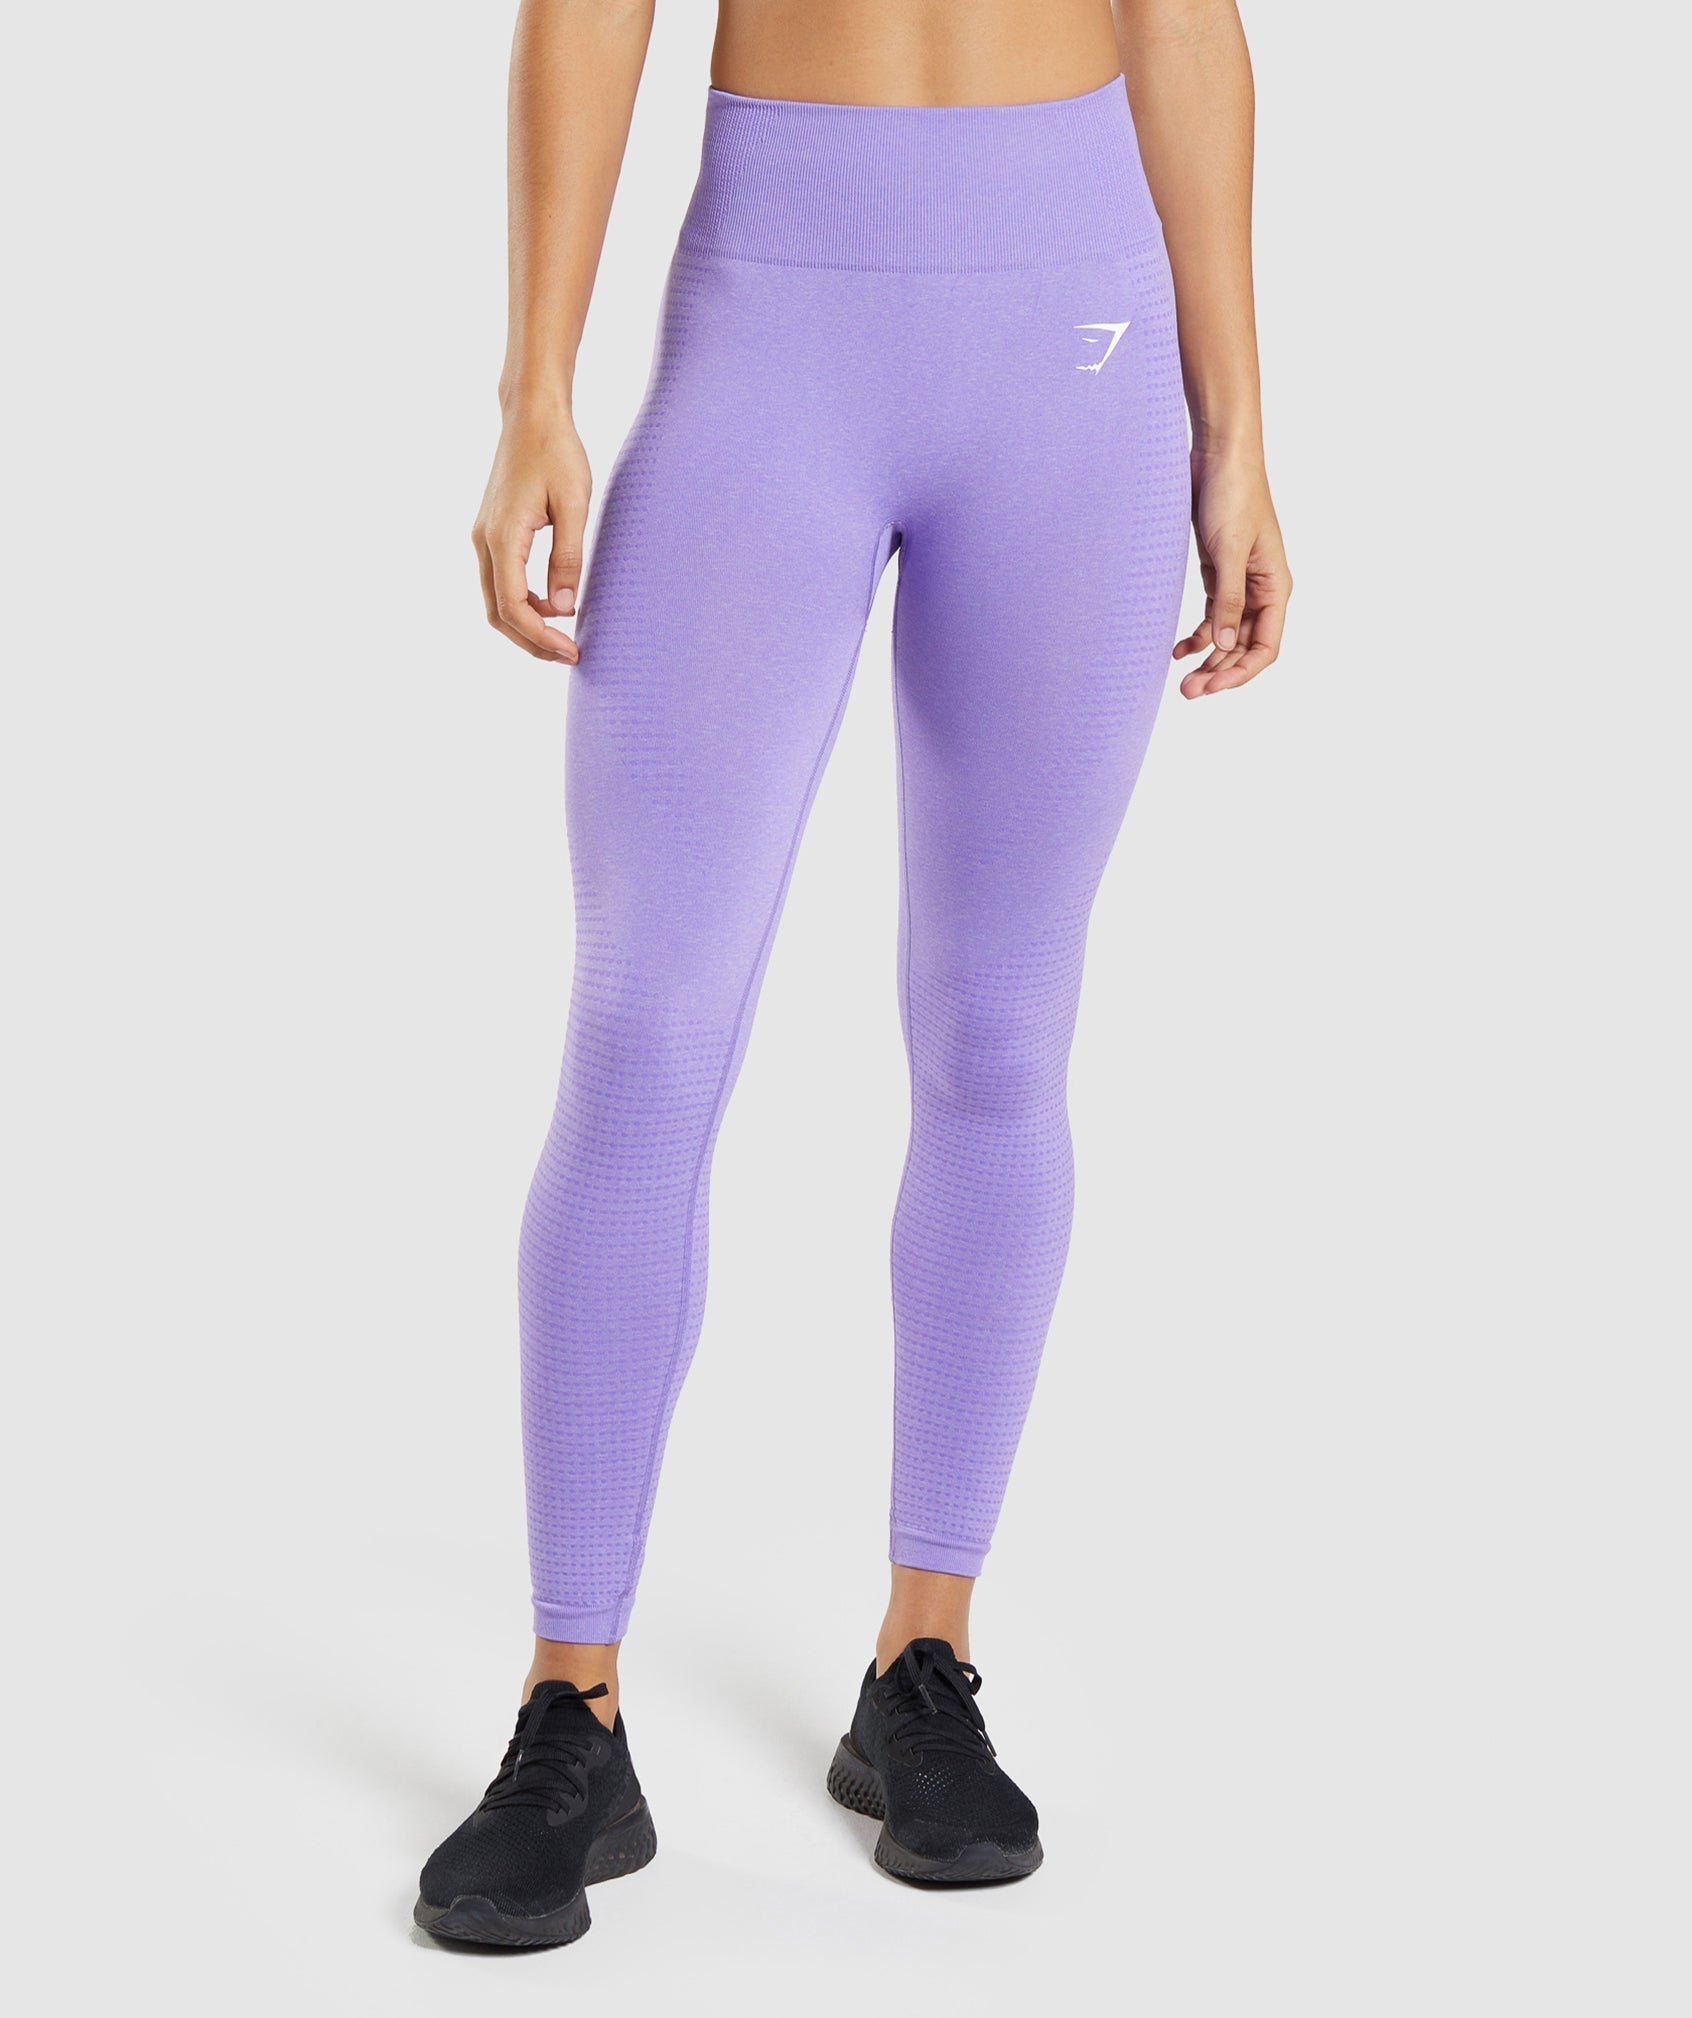 Gymshark adapt marl seamless leggings Light Purple Size S